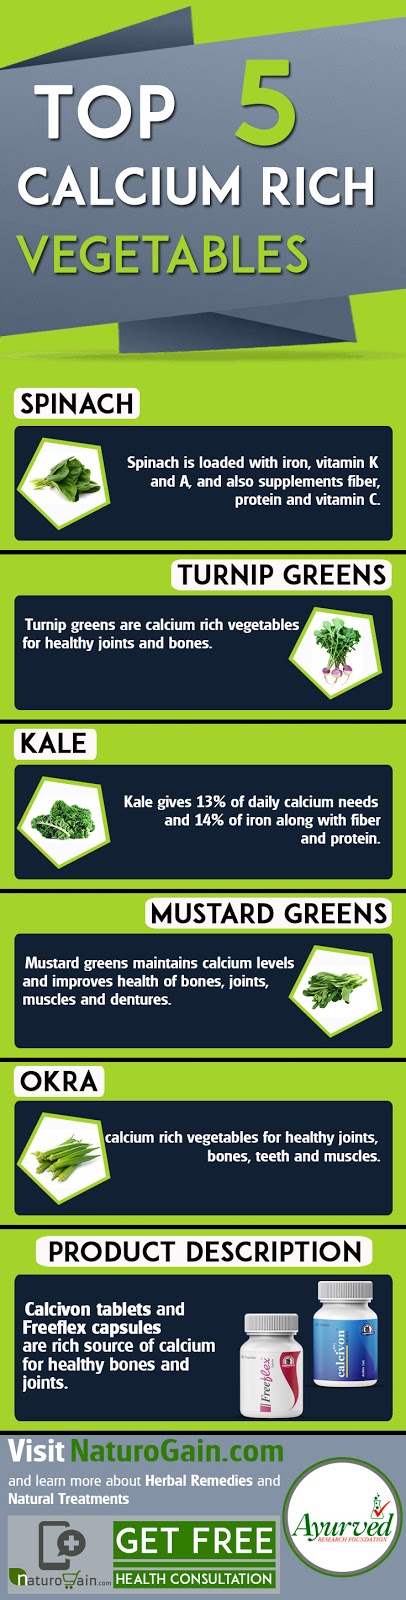 calcium-rich-vegetables-info-graphic